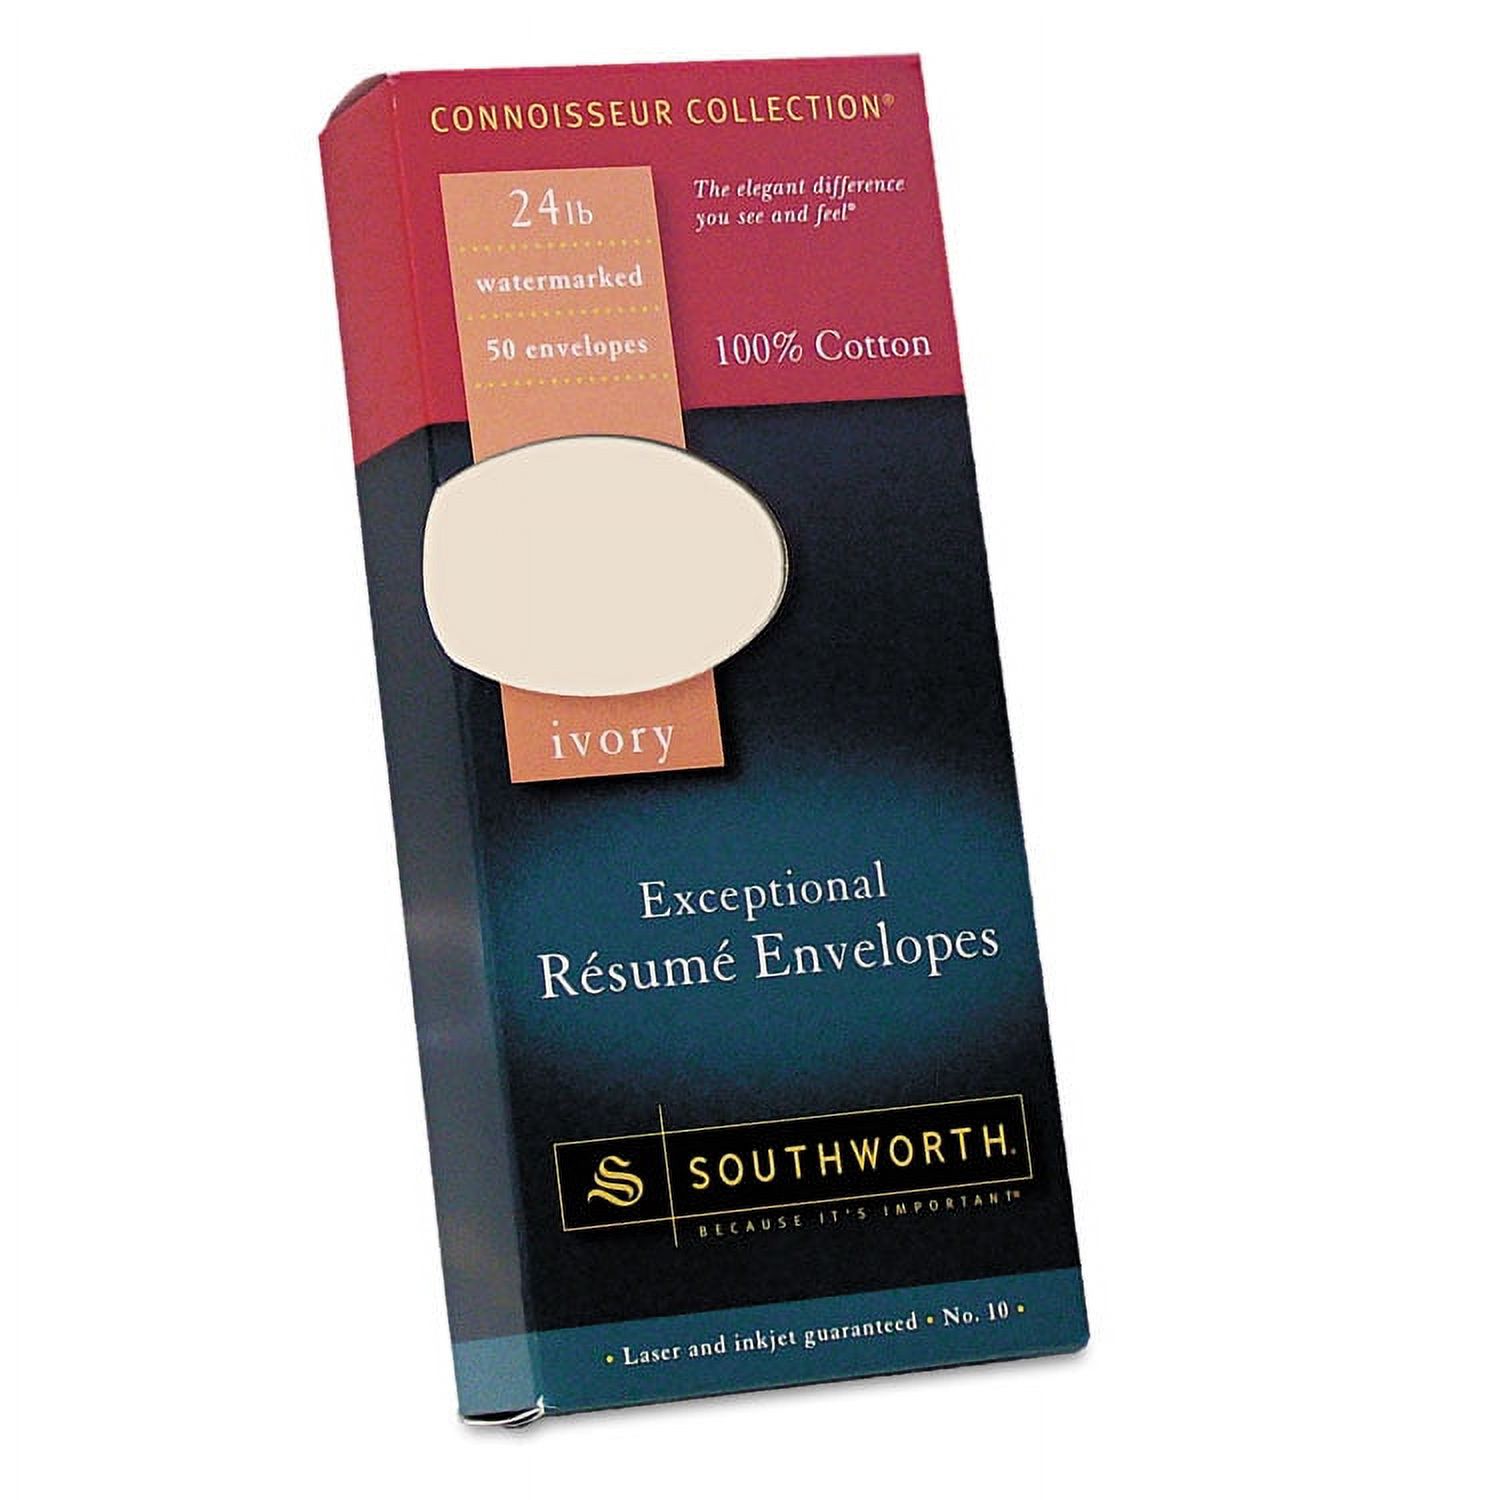 Southworth, SOUR14I10L, 100% Cotton Resume Envelopes, 50 / Box, Ivory - image 1 of 2